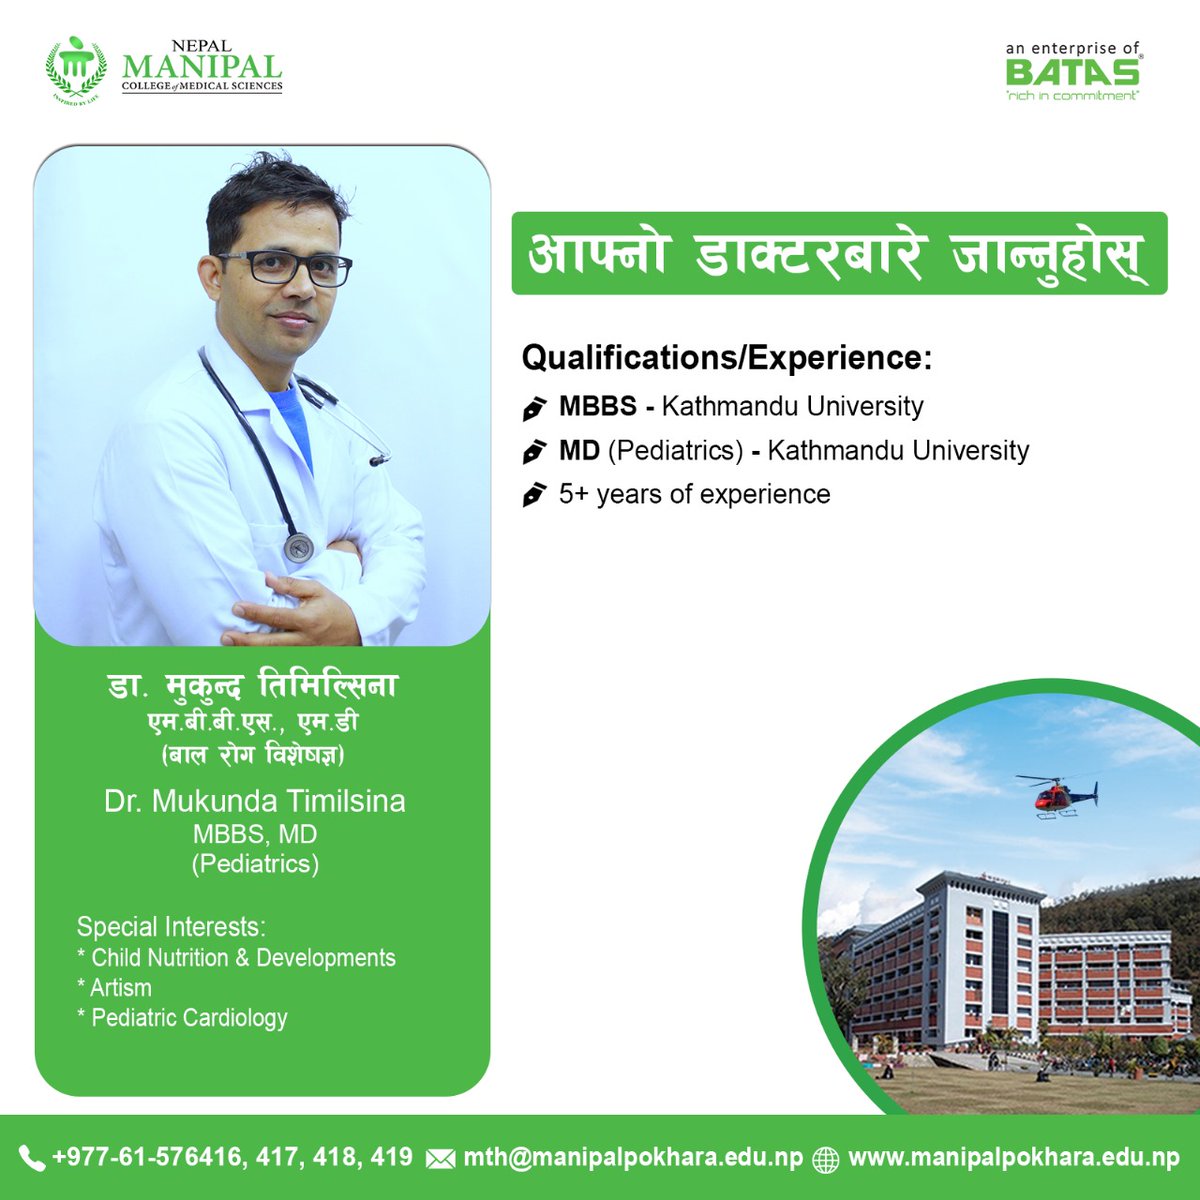 वरिष्ठ बाल रोग विशेषज्ञ

#KnowYourDoctor #Pediatrics #NepalManipal #ManipalPokhara #PokharaManipal #ManipalTeachingHospital #BATASorganization #BATASnepal #BATASmanipal #BATASpokhara #manipalbatas